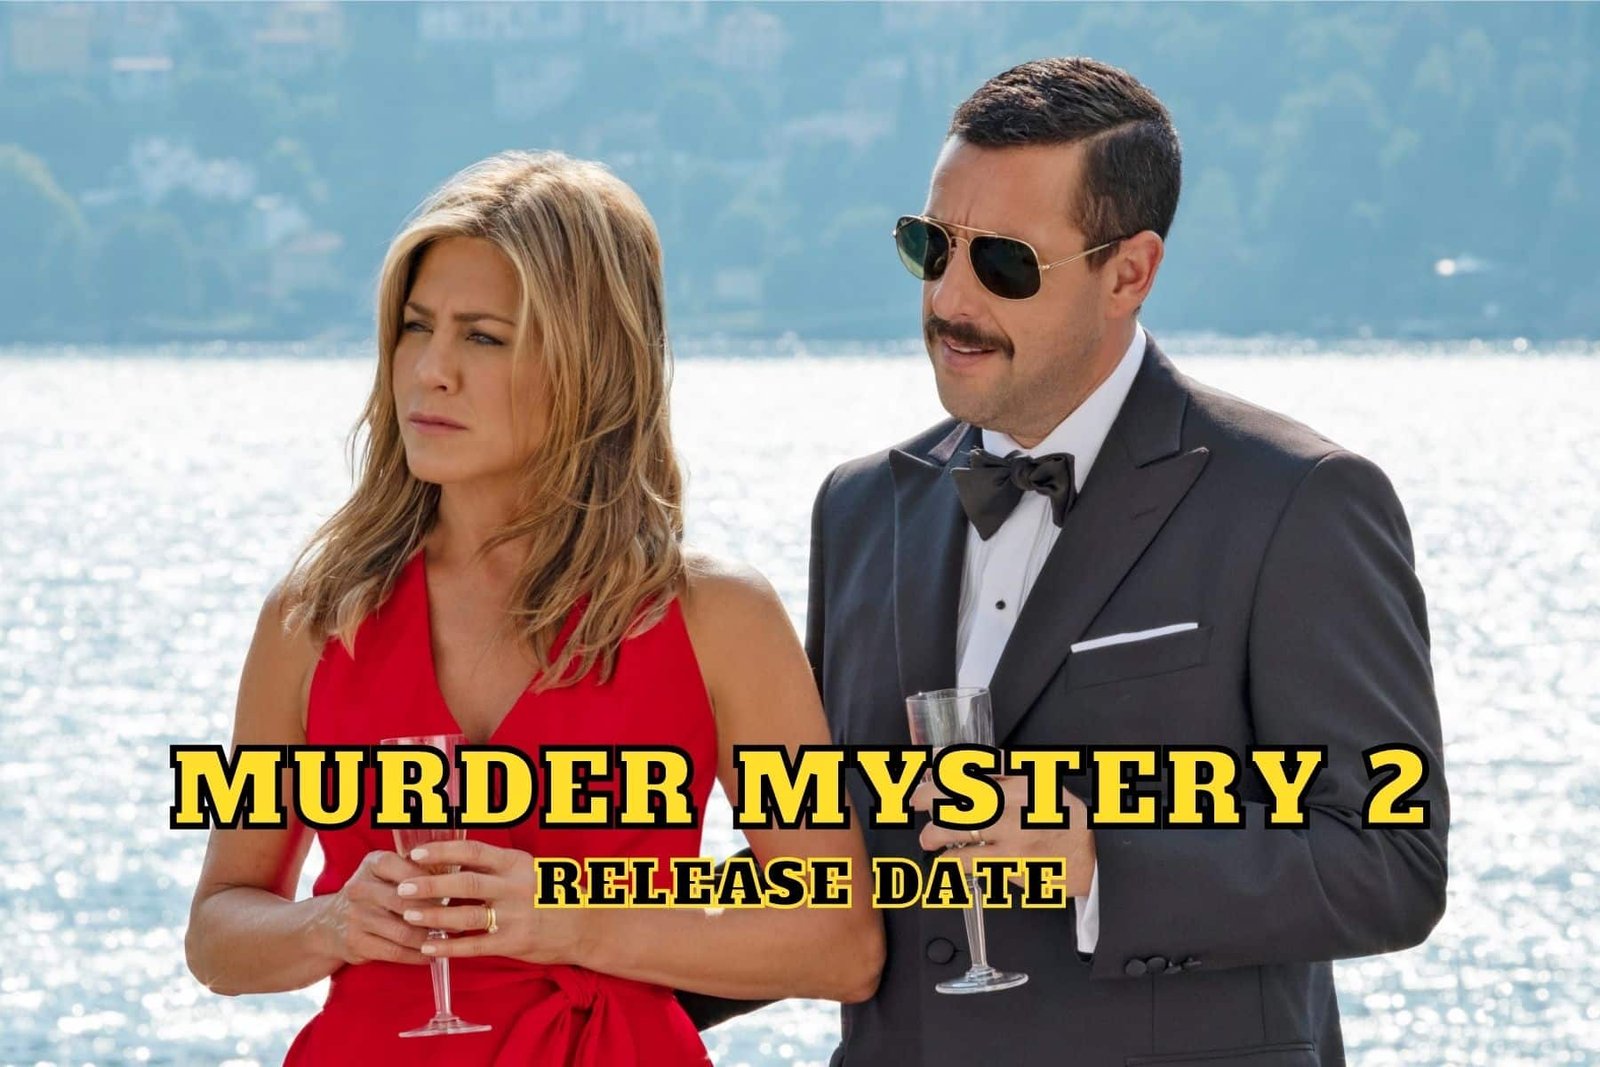 Murder Mystery 2 Release Date, Trailer - Is It Canceled?